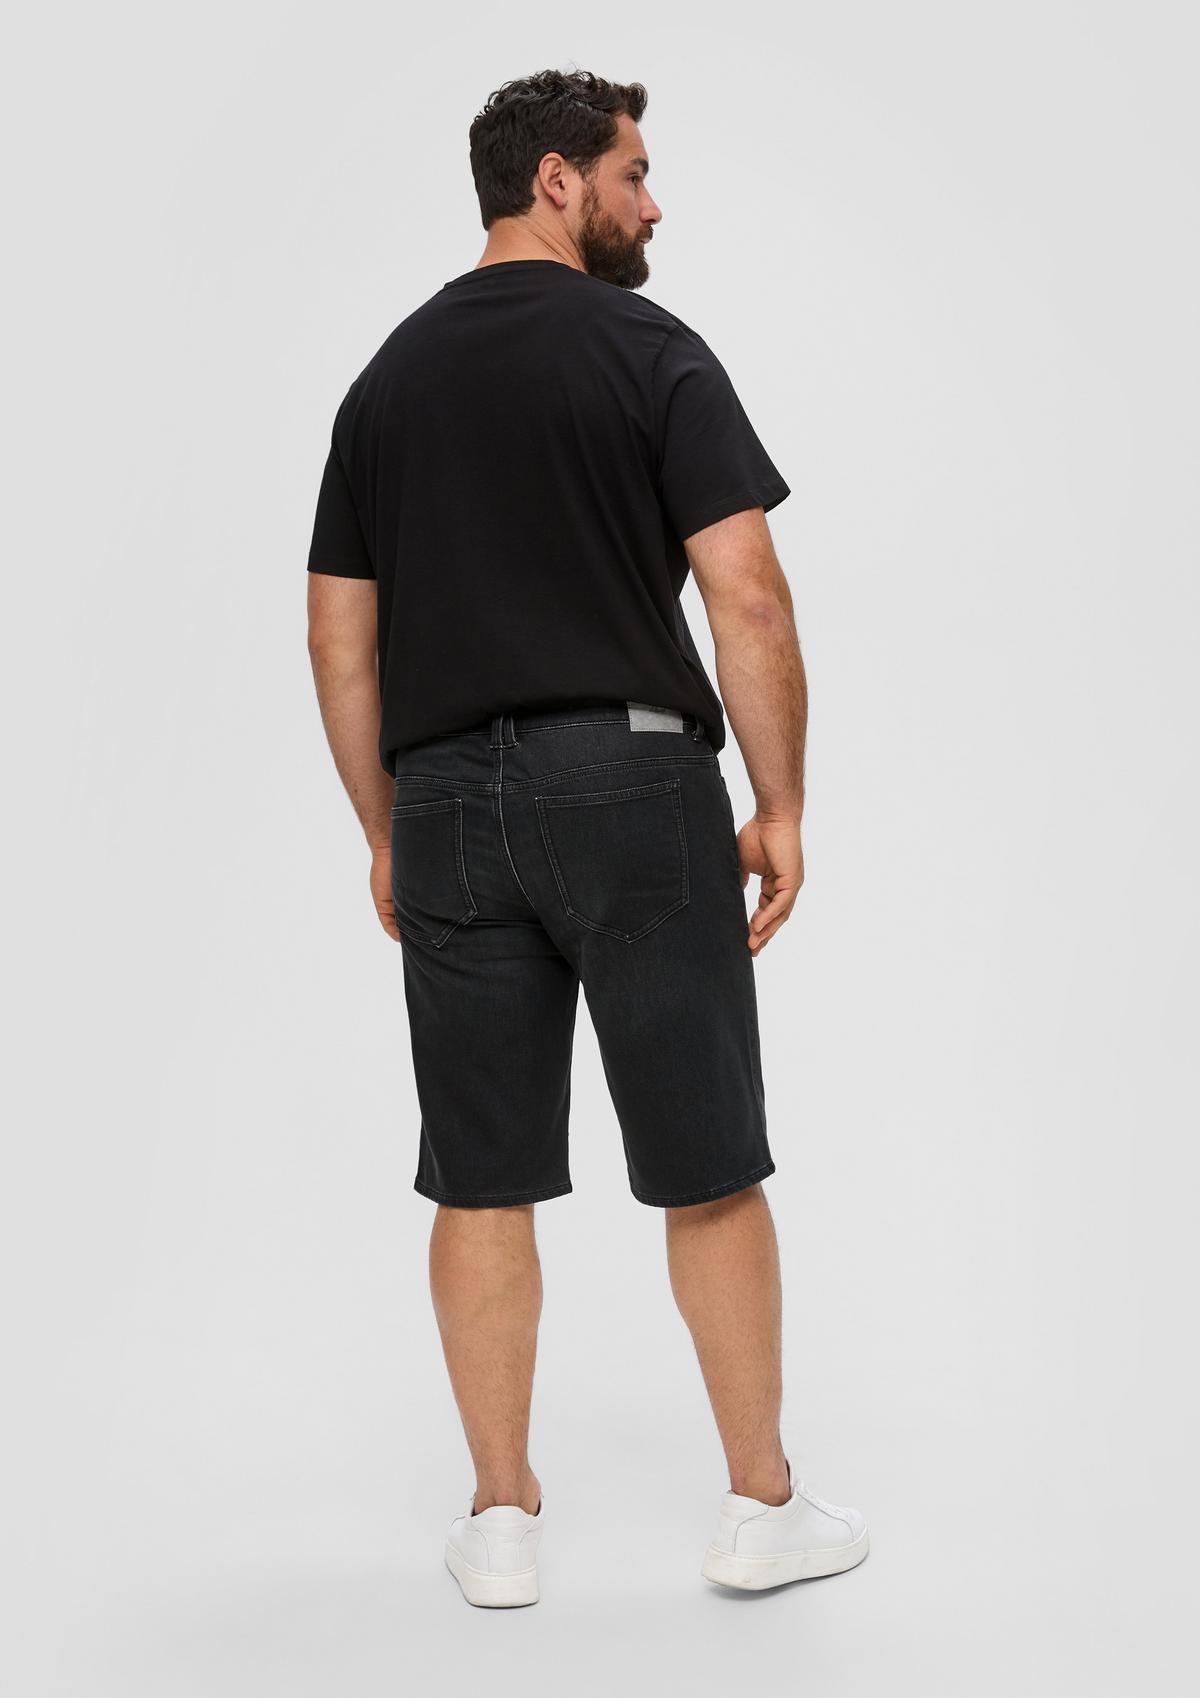 s.Oliver Mauro Bermuda jeans / regular fit / mid rise / straight leg